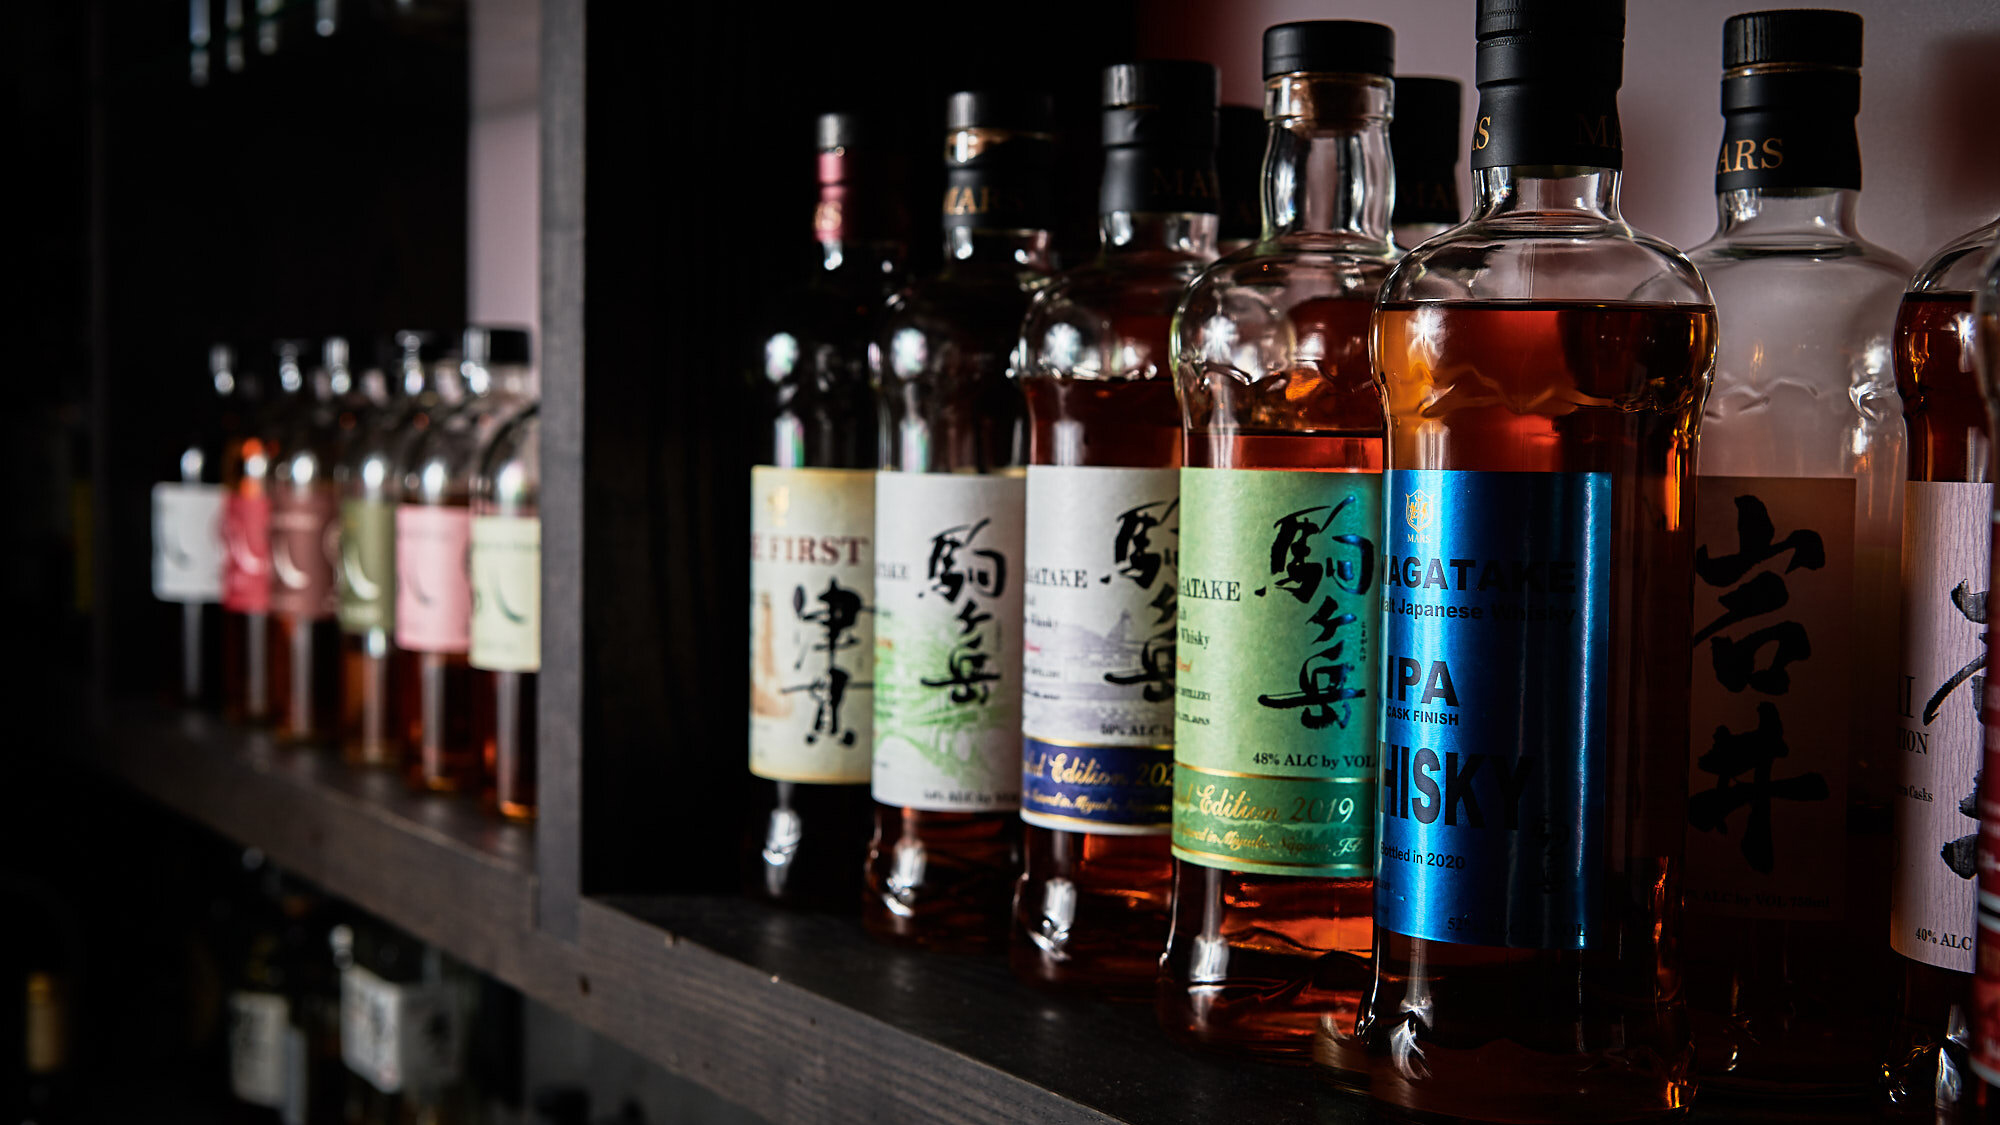 Yokai SF Japanese whisky